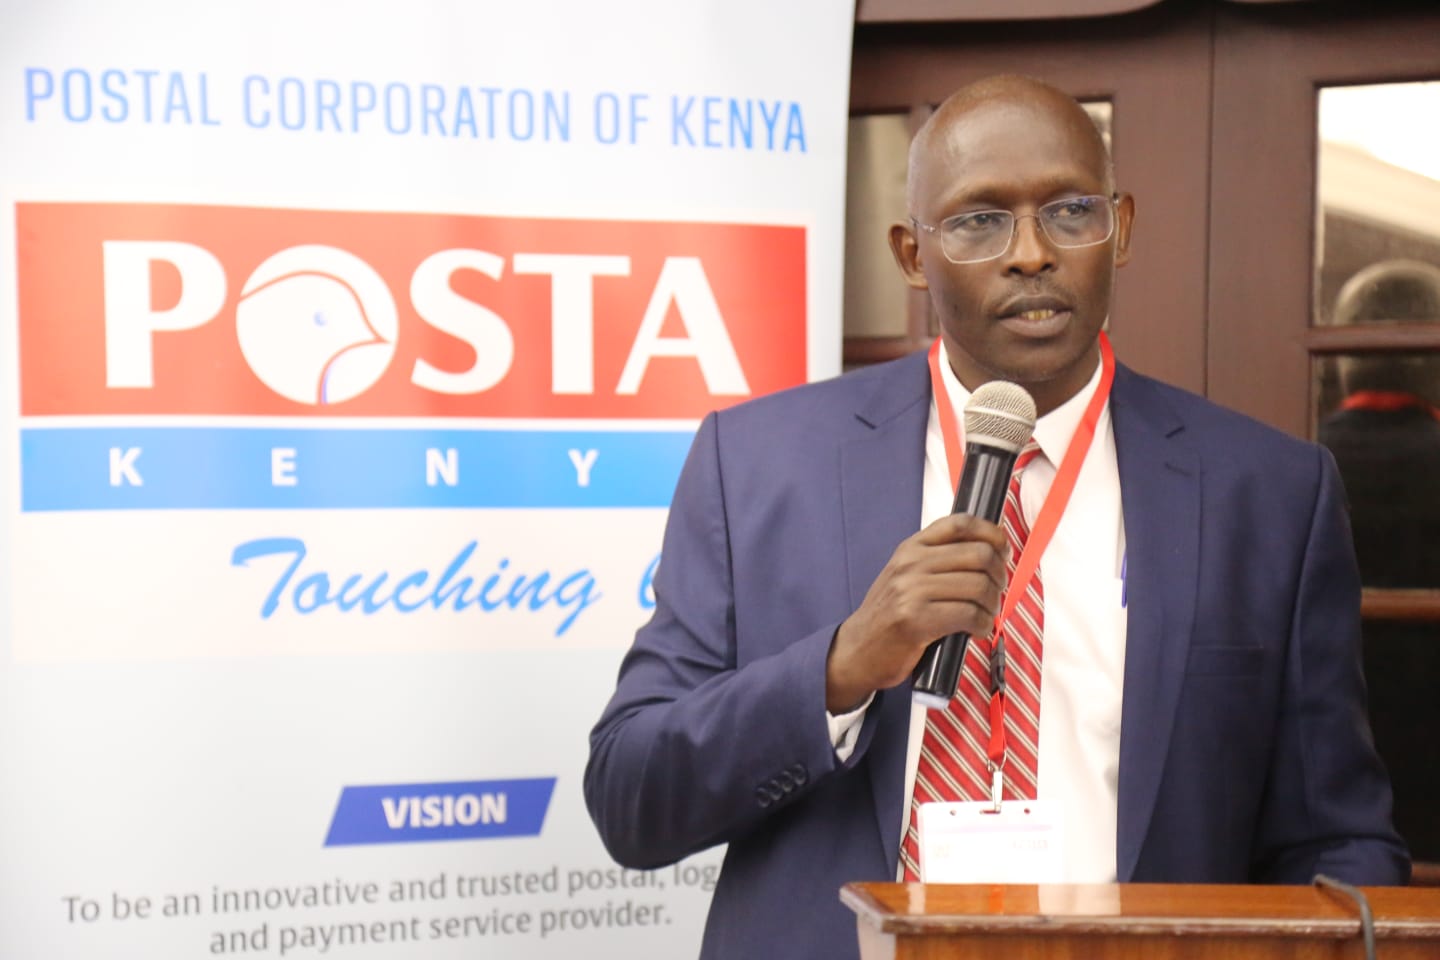 Scandal Erupts at Posta Kenya Over Unpaid Salaries, Fake Certificates & Management Disputes